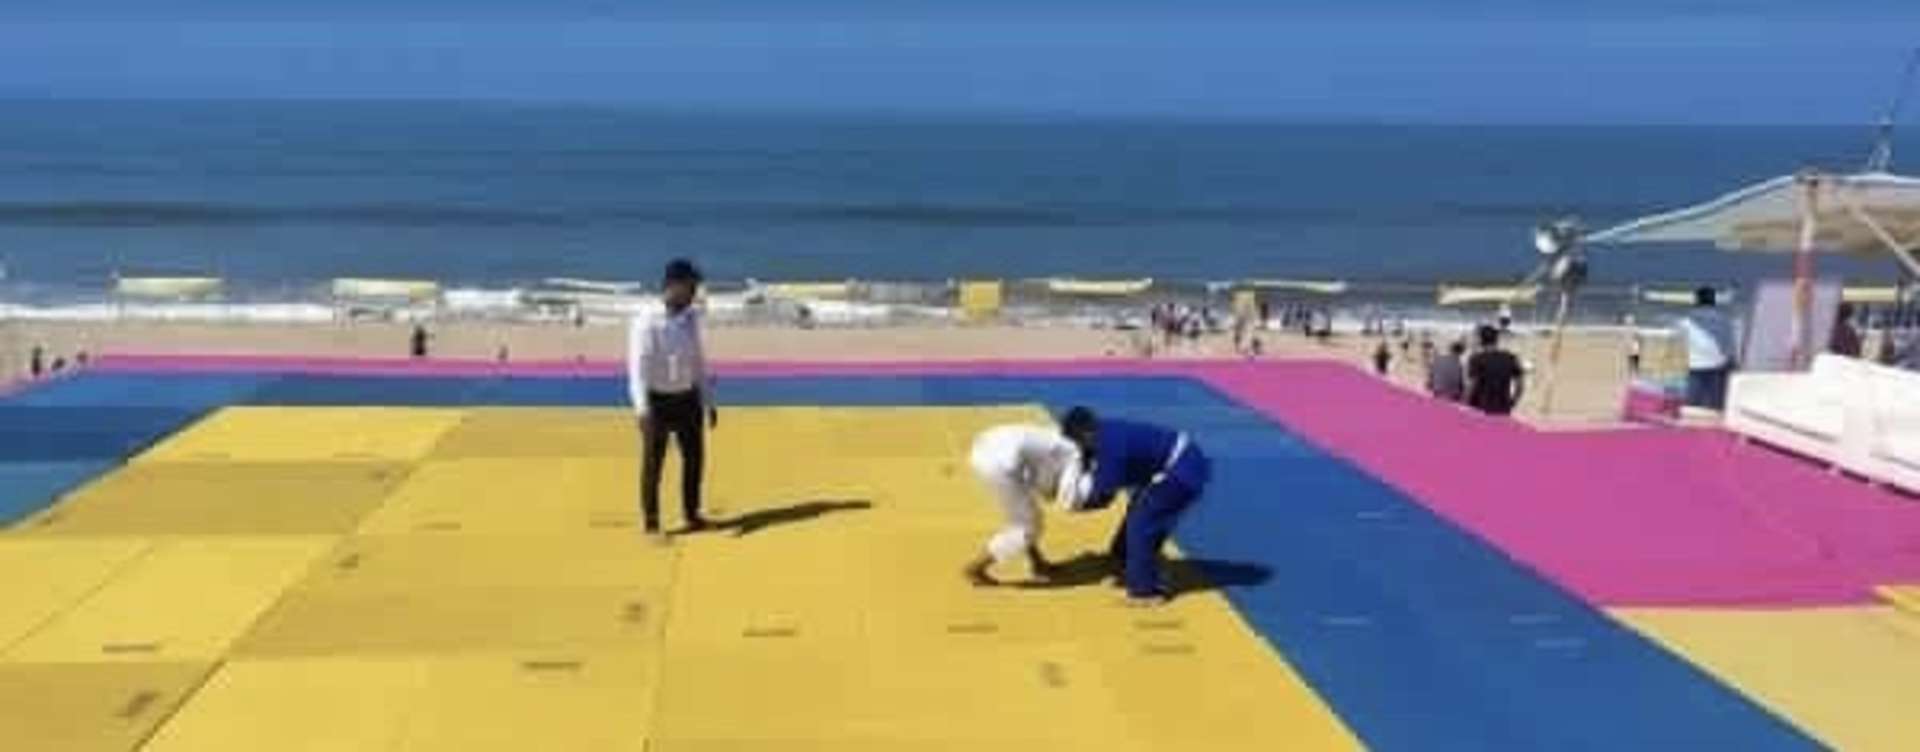 Judo on the Beach /